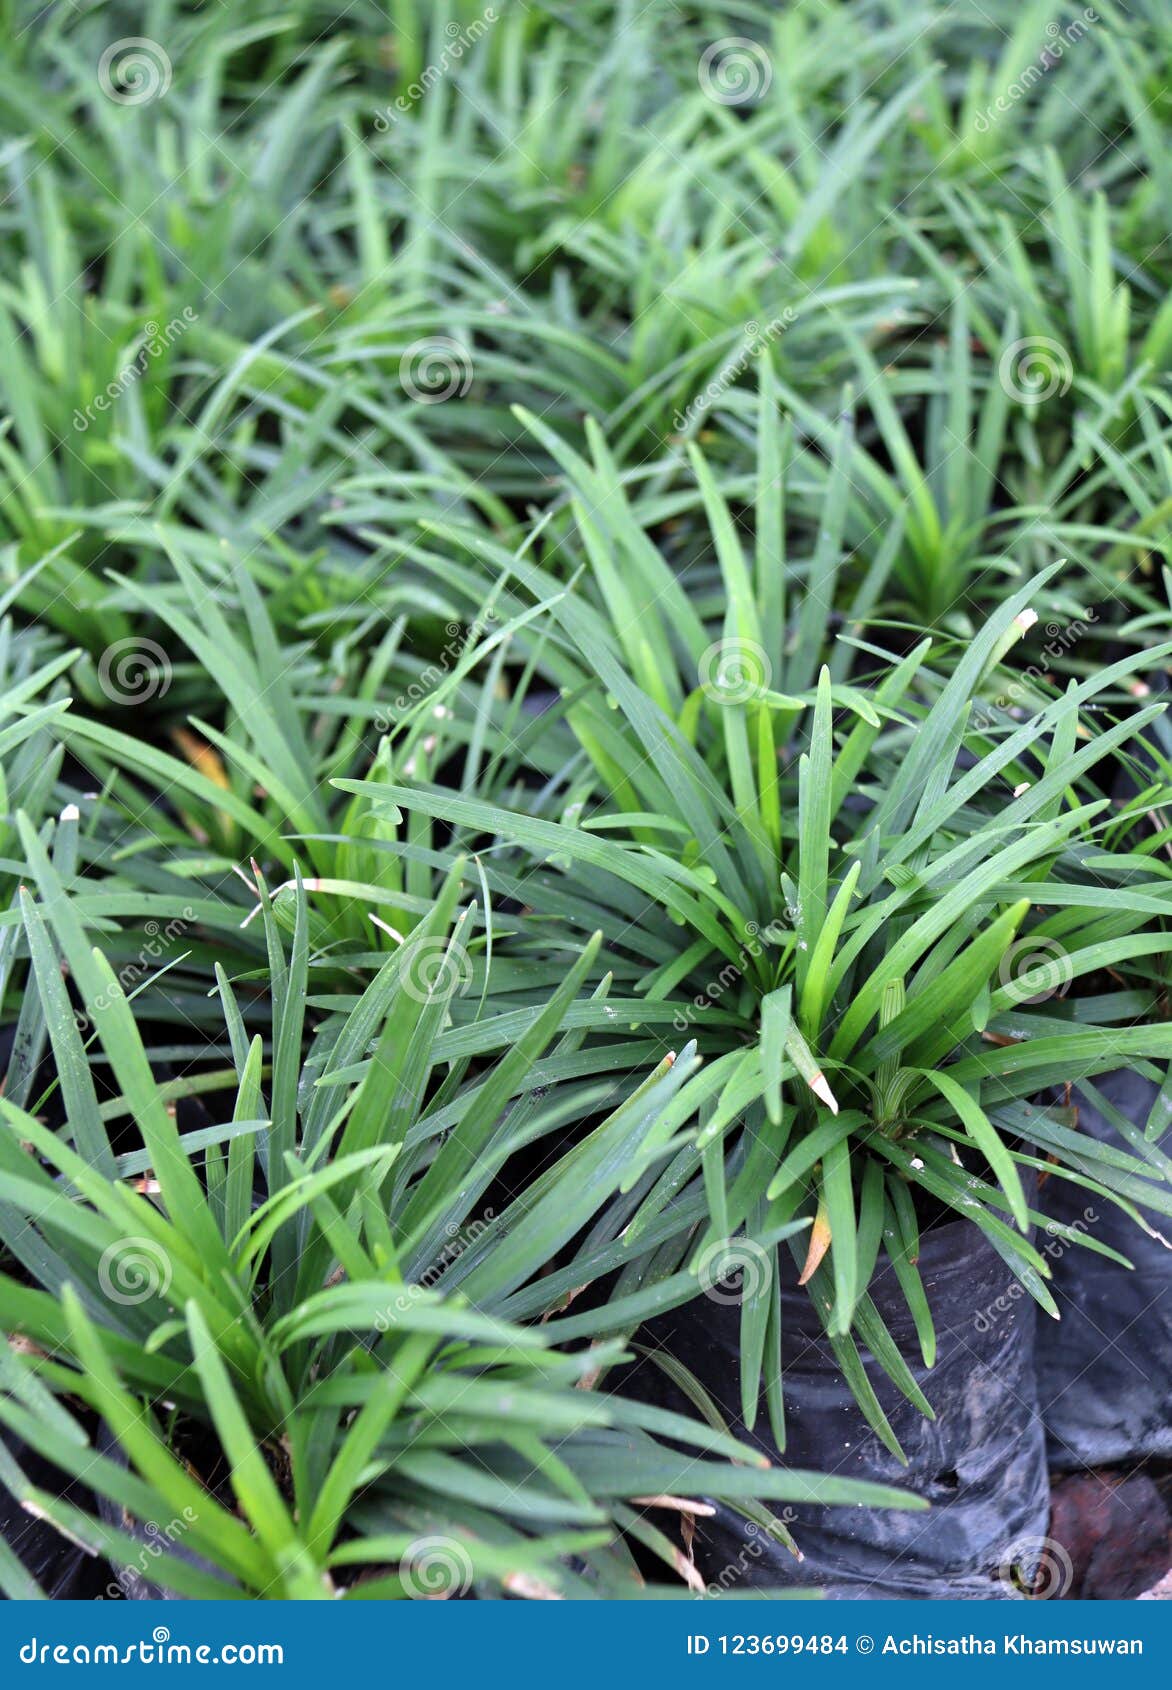 mini mondo grass in the plastic black bag of nursery plants. snakes beard plant is a dense herbaceous evergreen perennial grass.